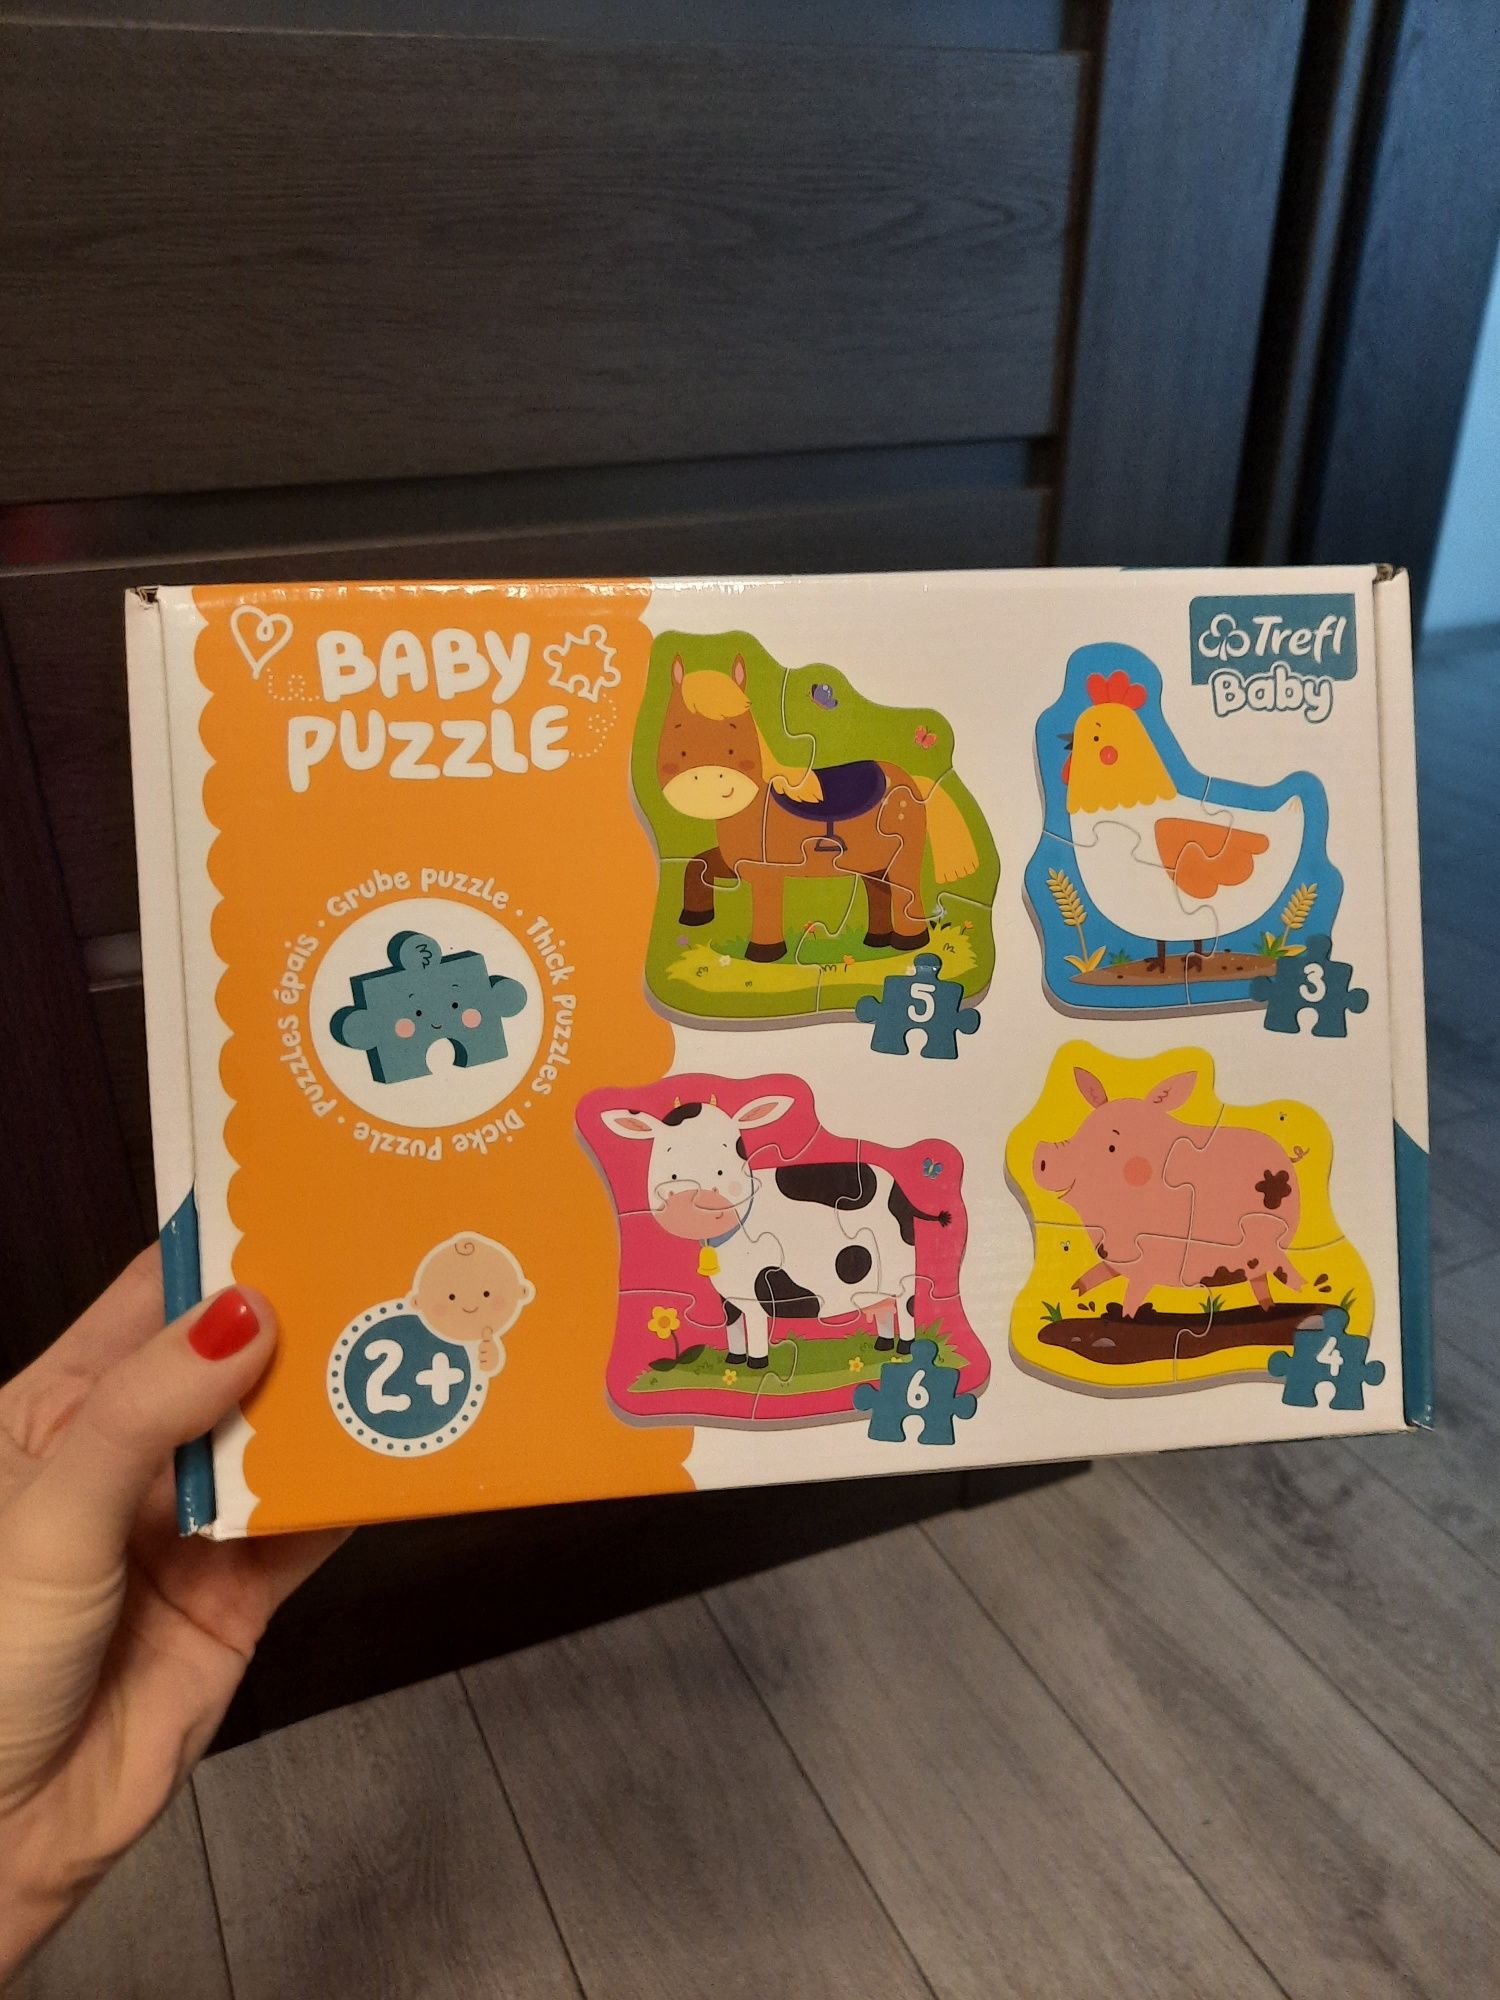 Baby puzzle / 2+